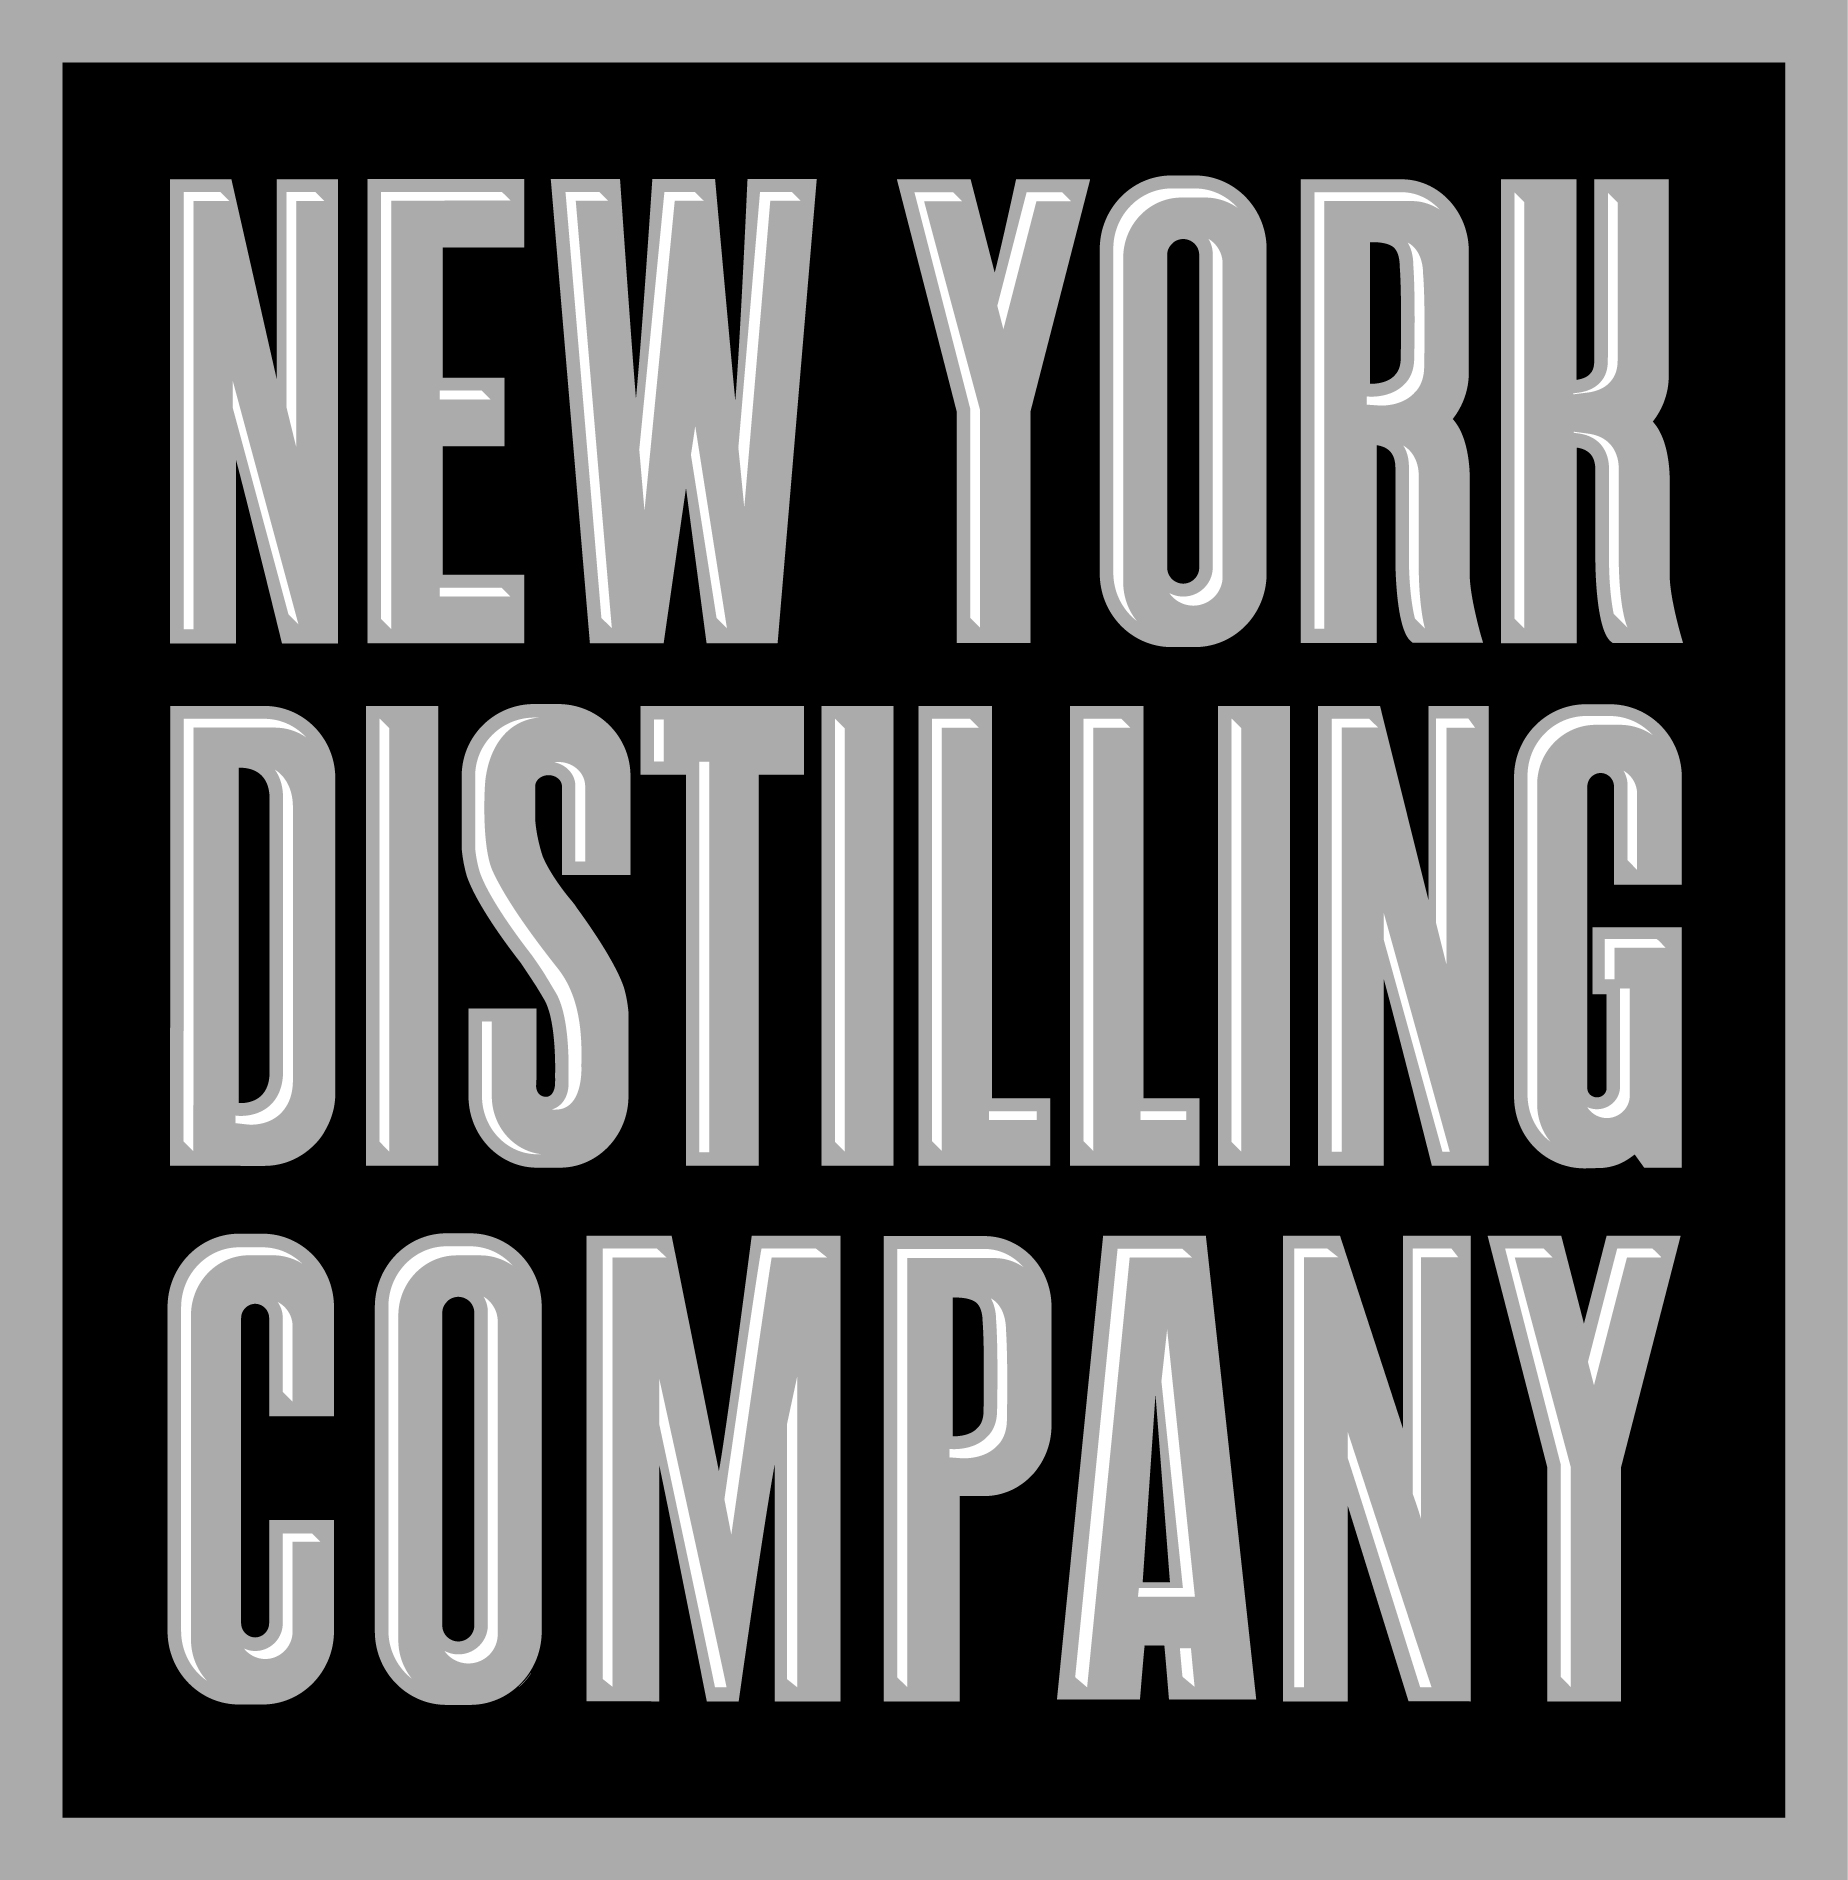 New York Distilling Company